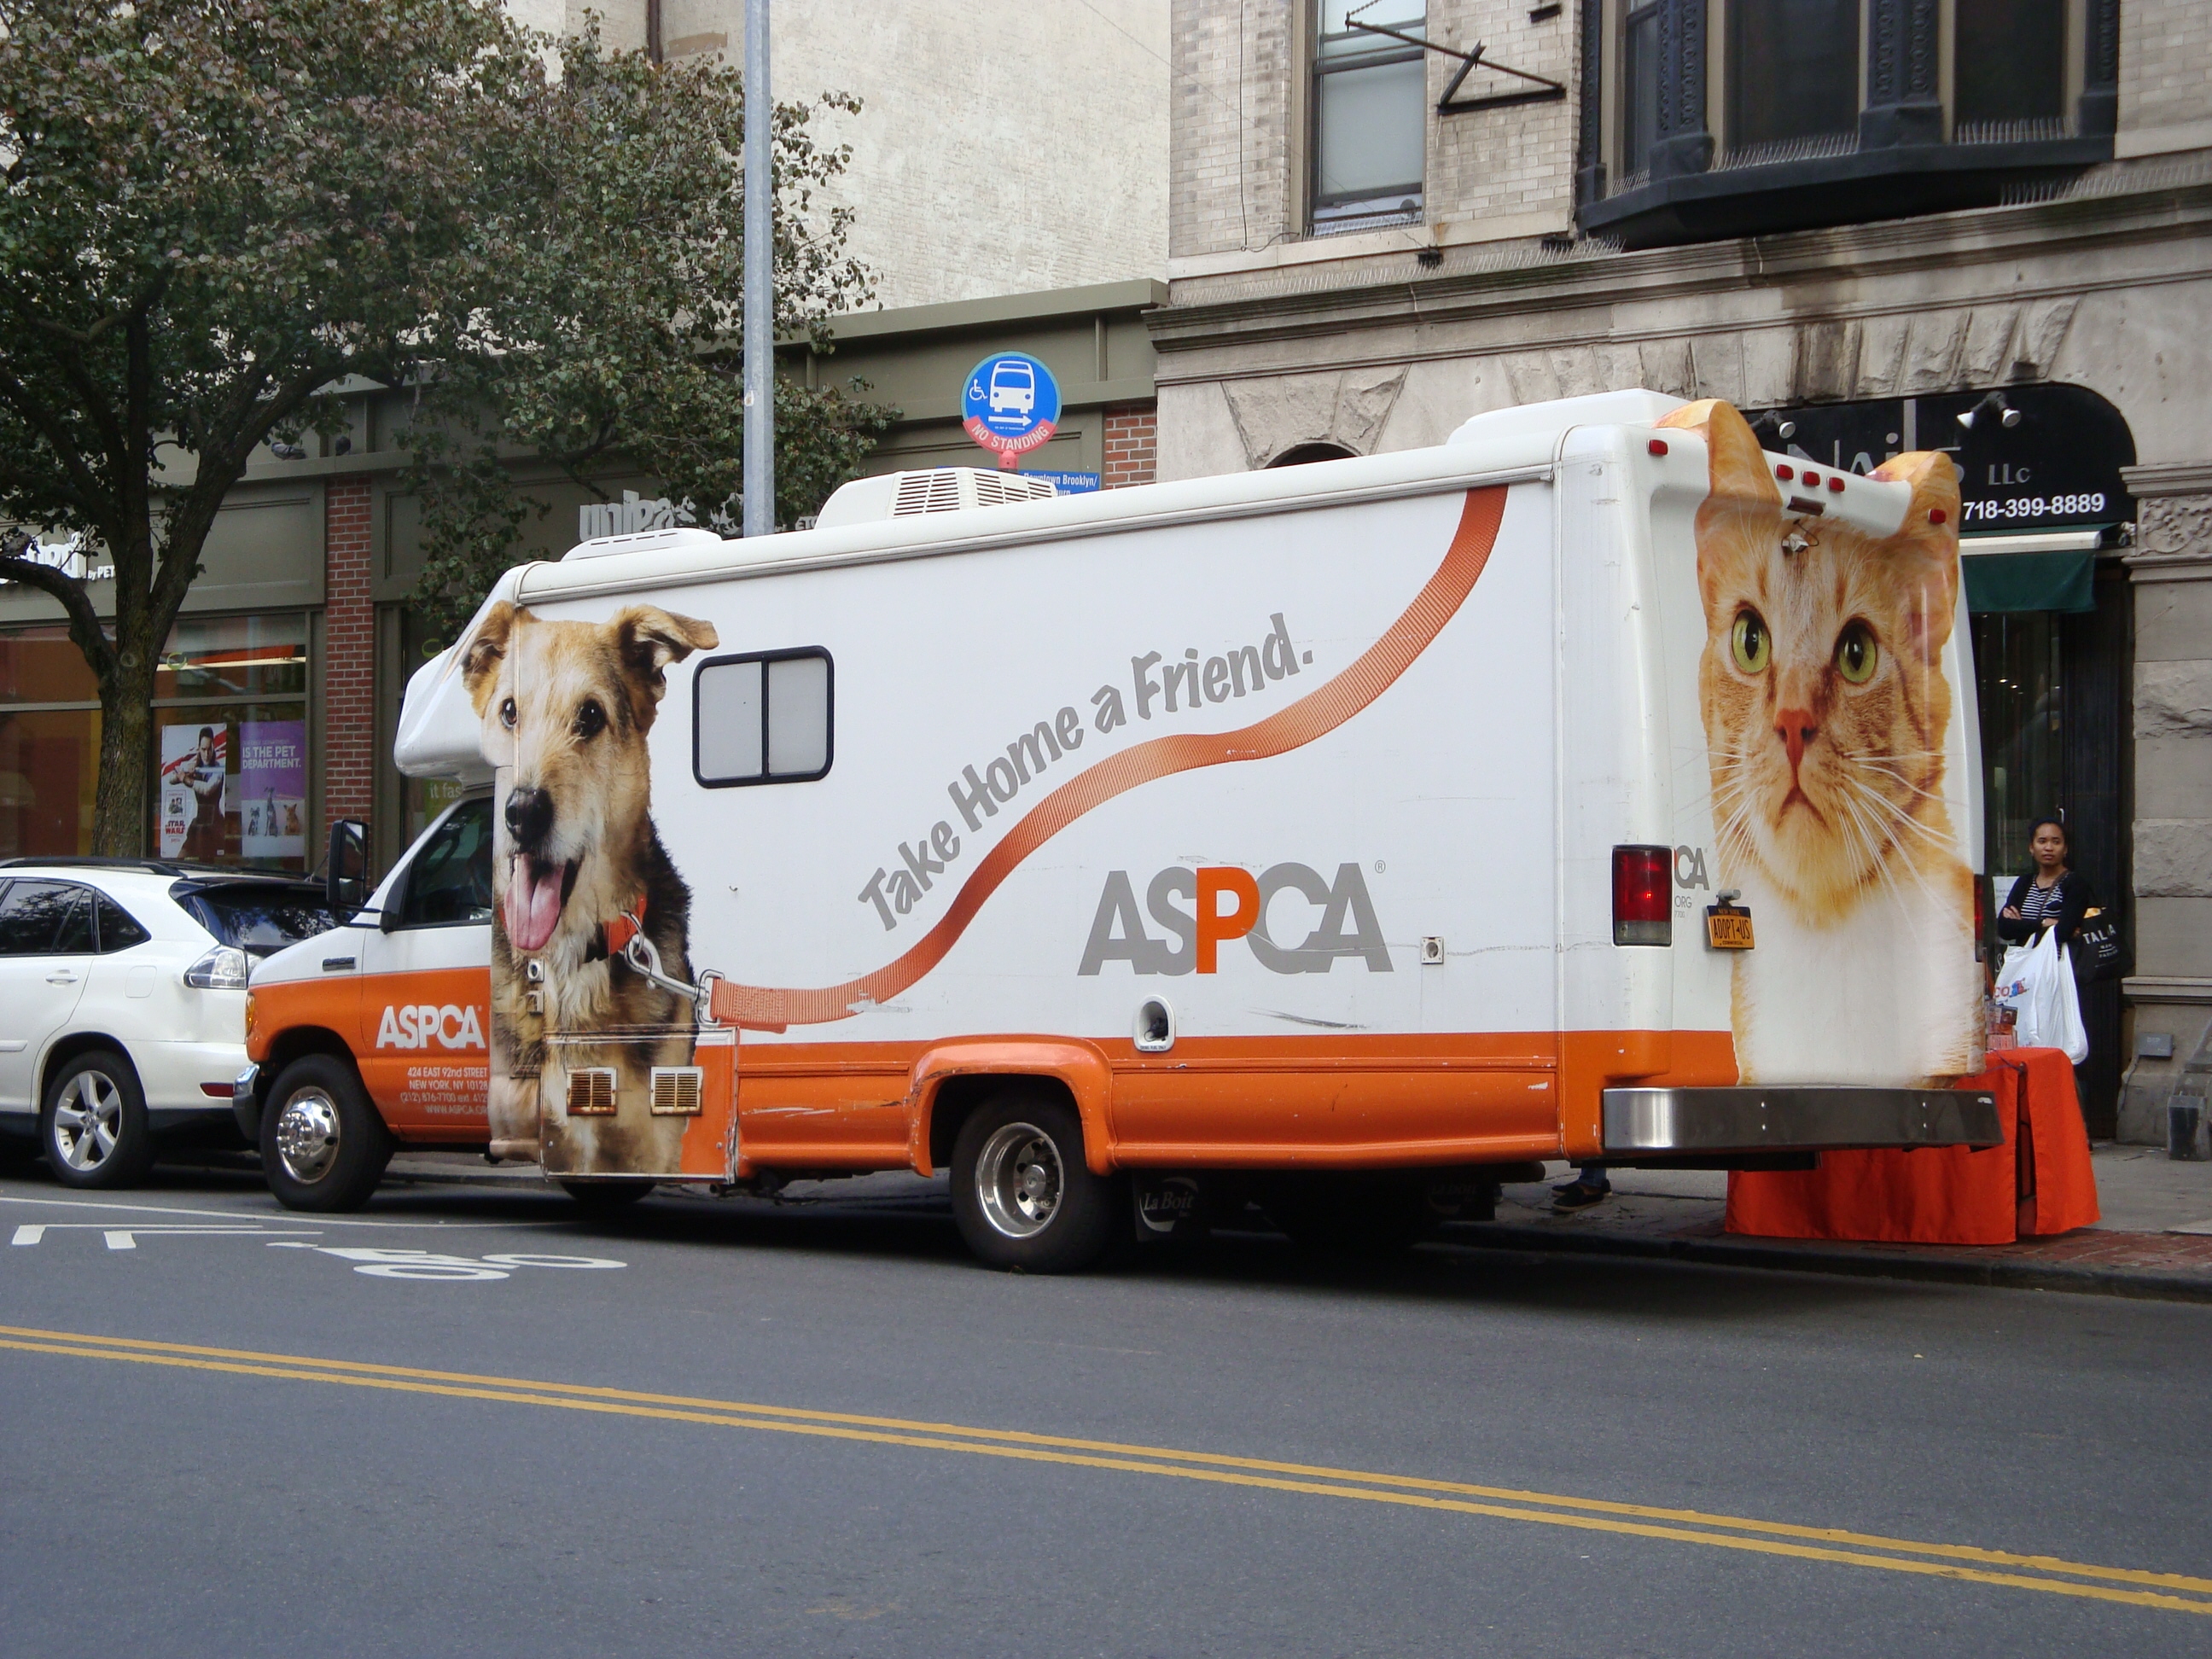 ASPCA_Vehicle_side_view